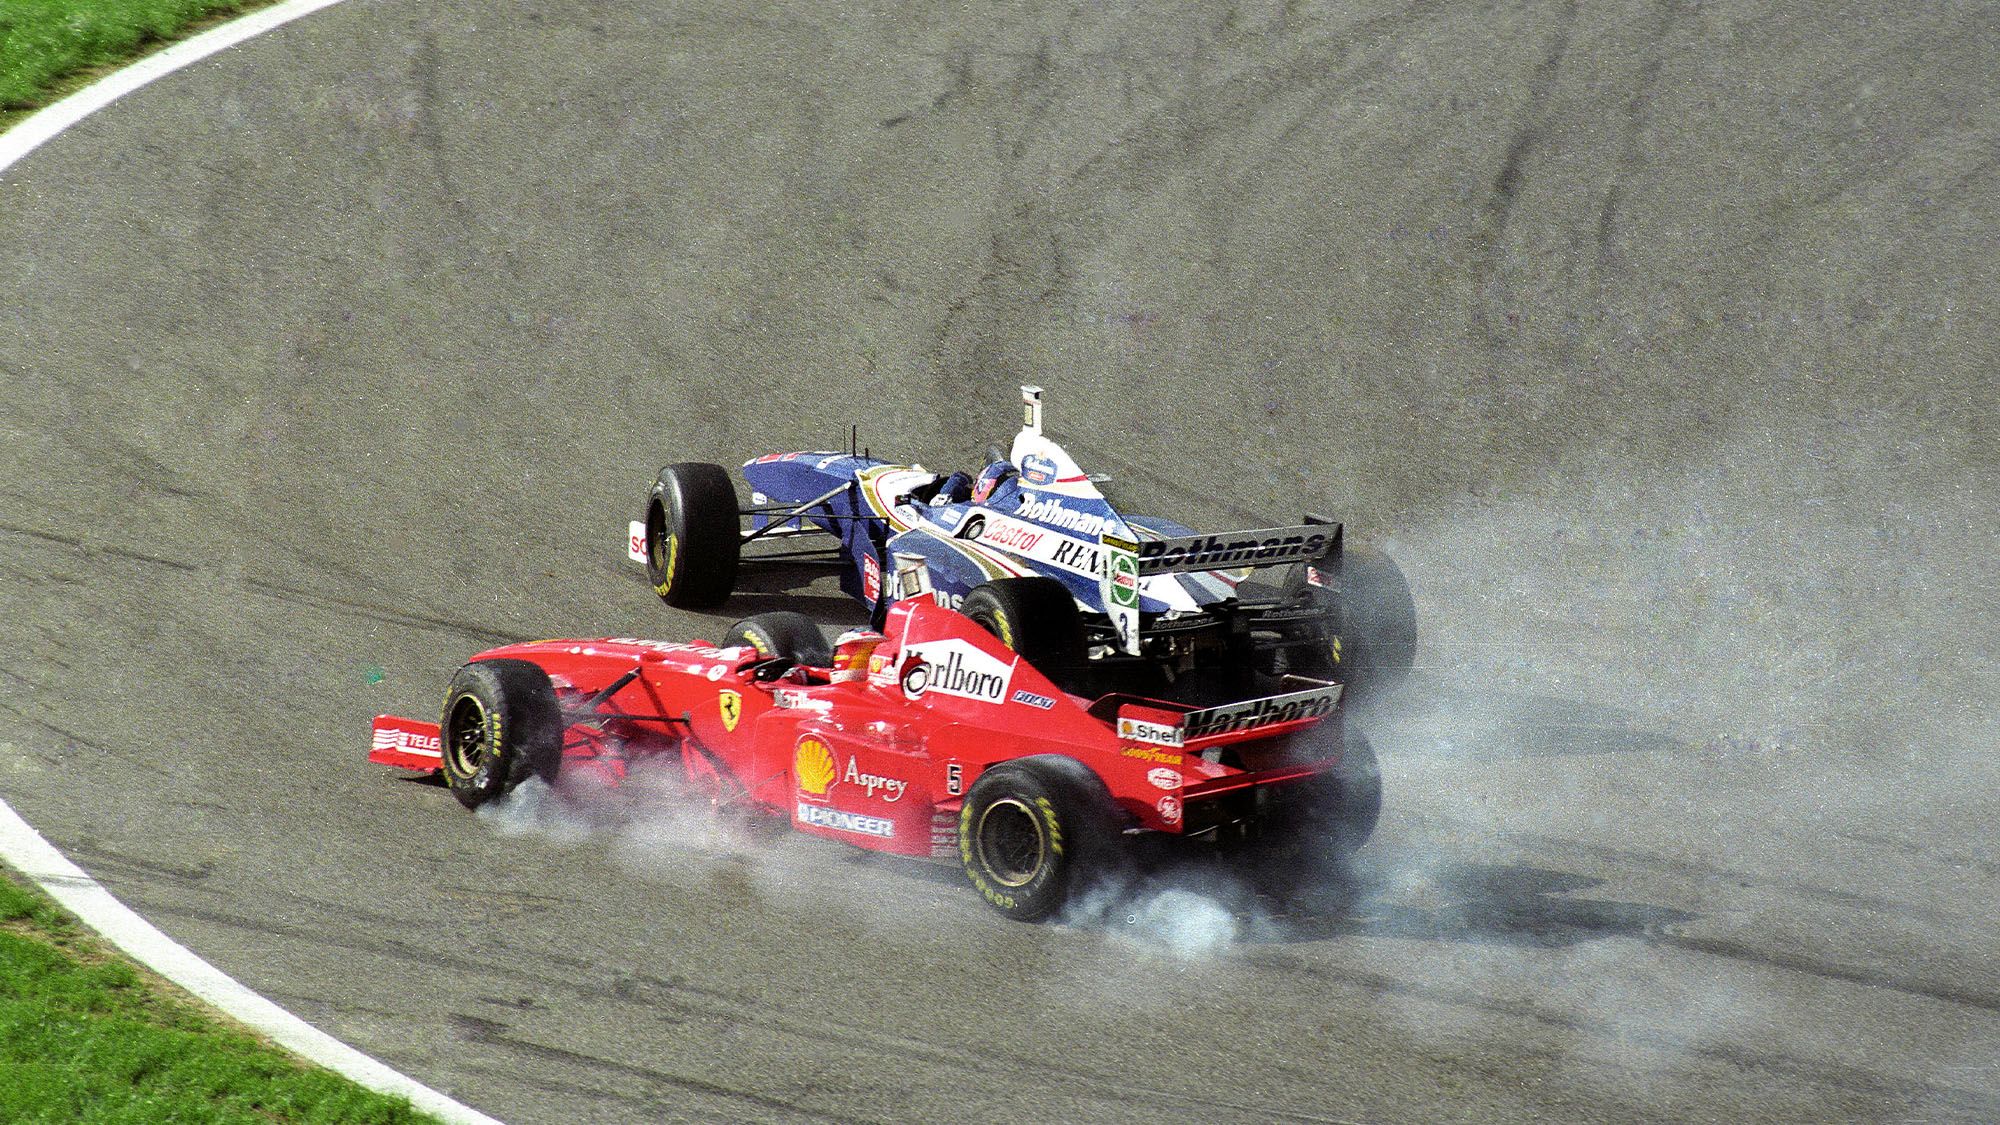 1997 European Grand Prix Schumacher Villenueve Crash